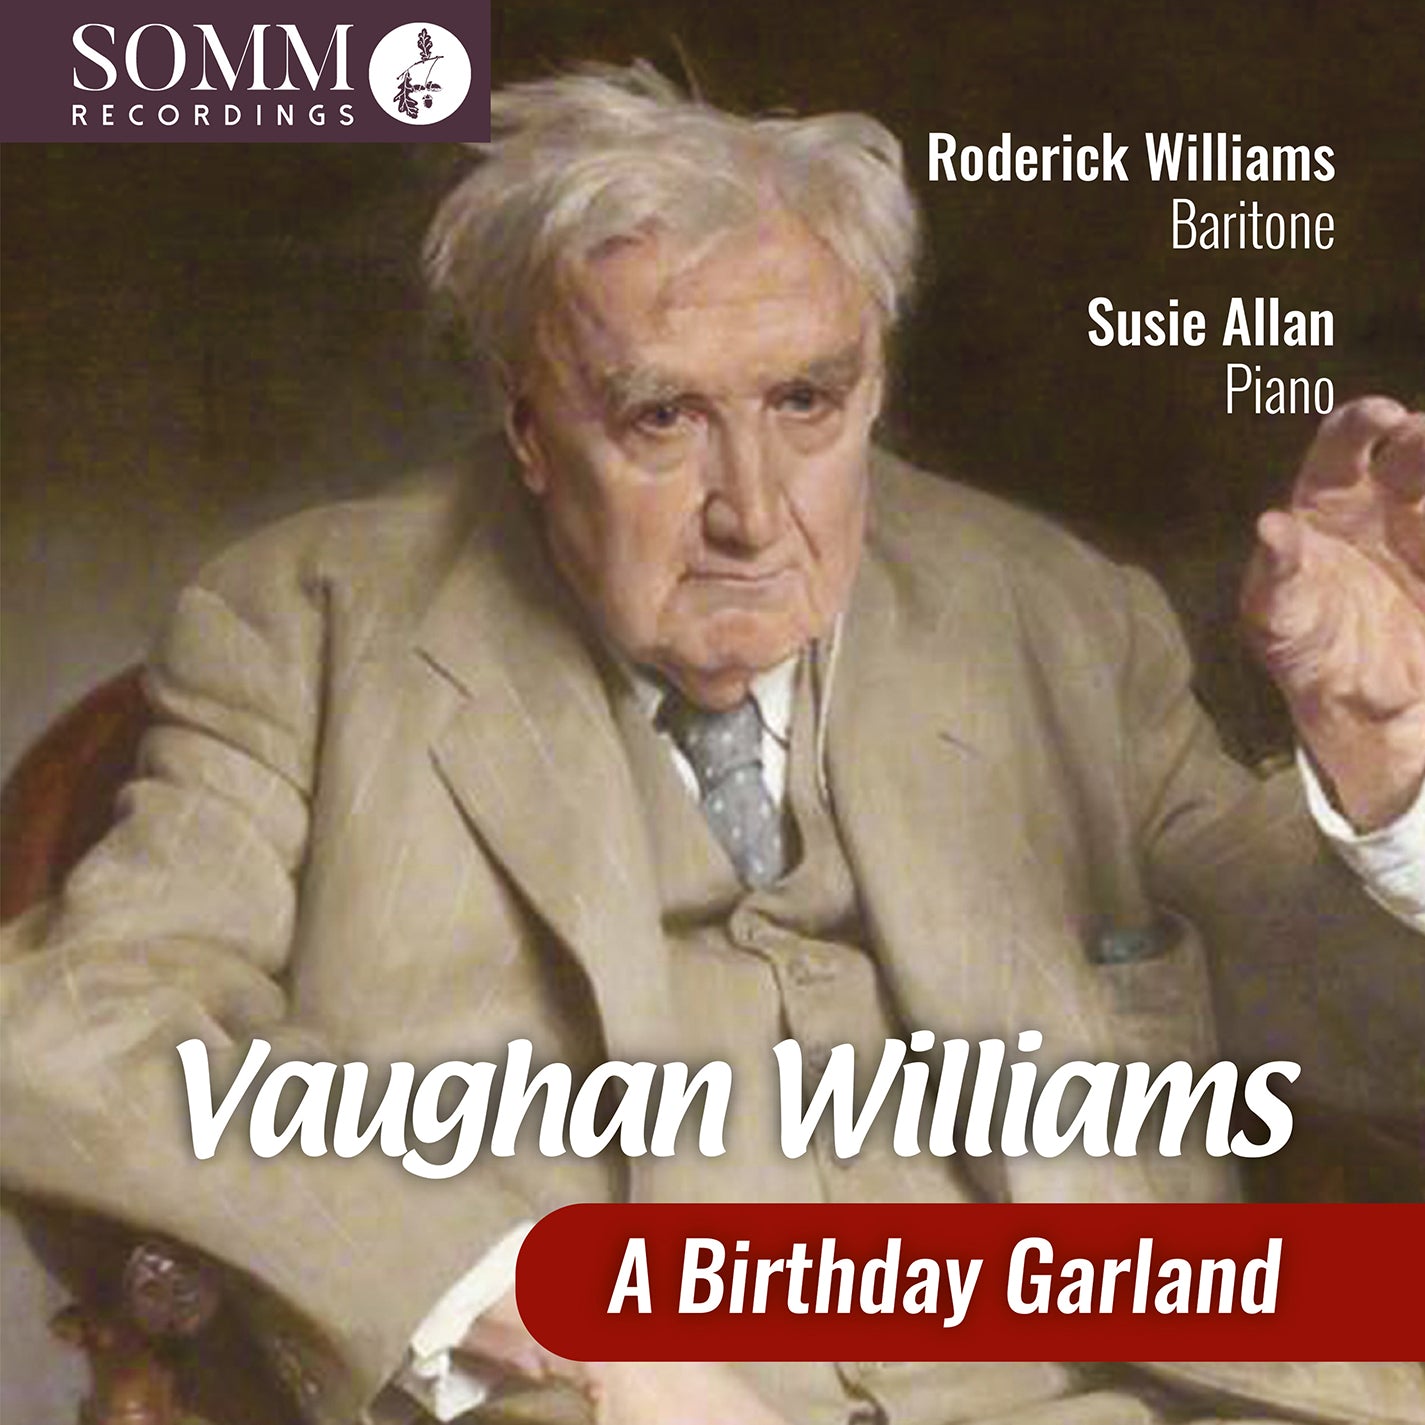 Vaughan Williams - A Birthday Garland / Roderick Williams & Susie Allan